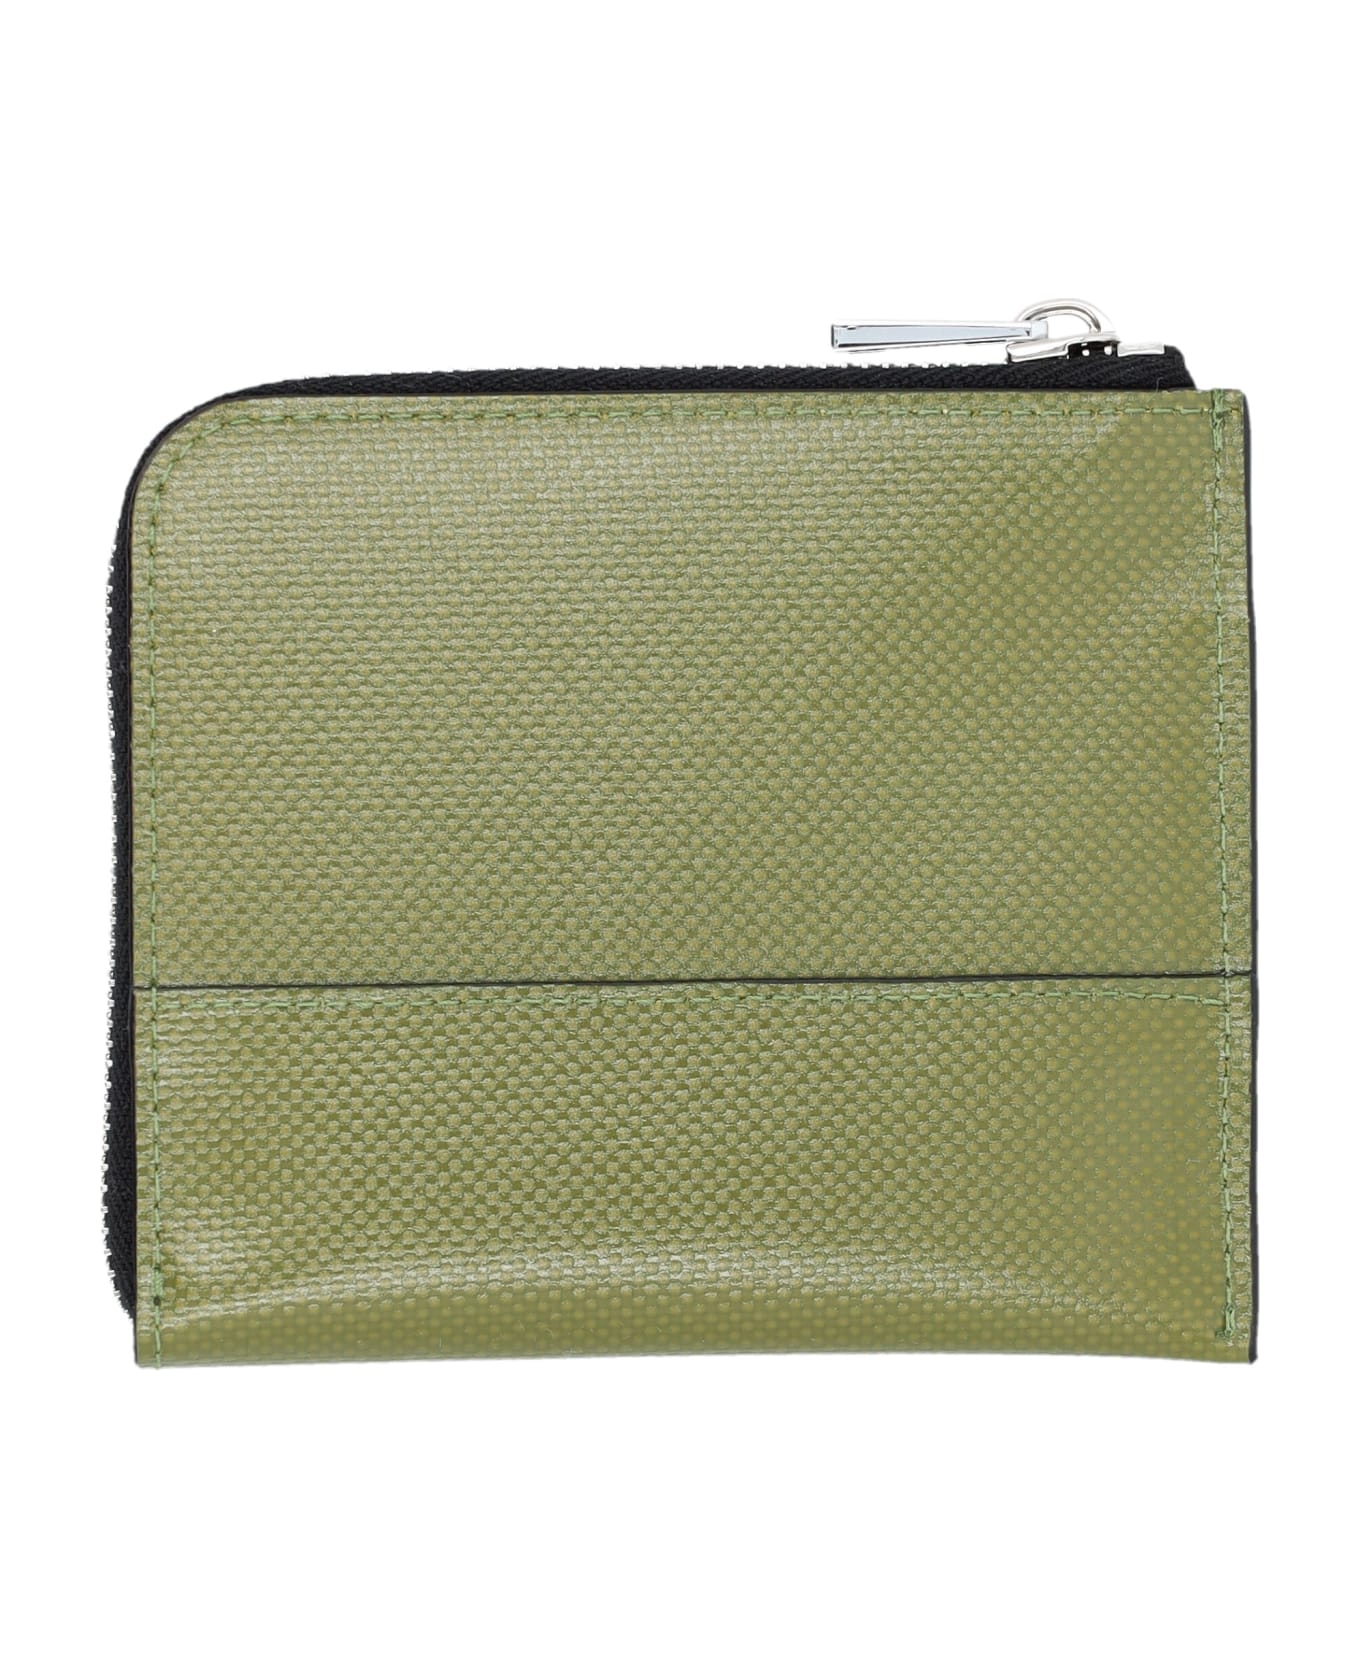 Marni Zip Wallet - MILITARY GREEN 財布